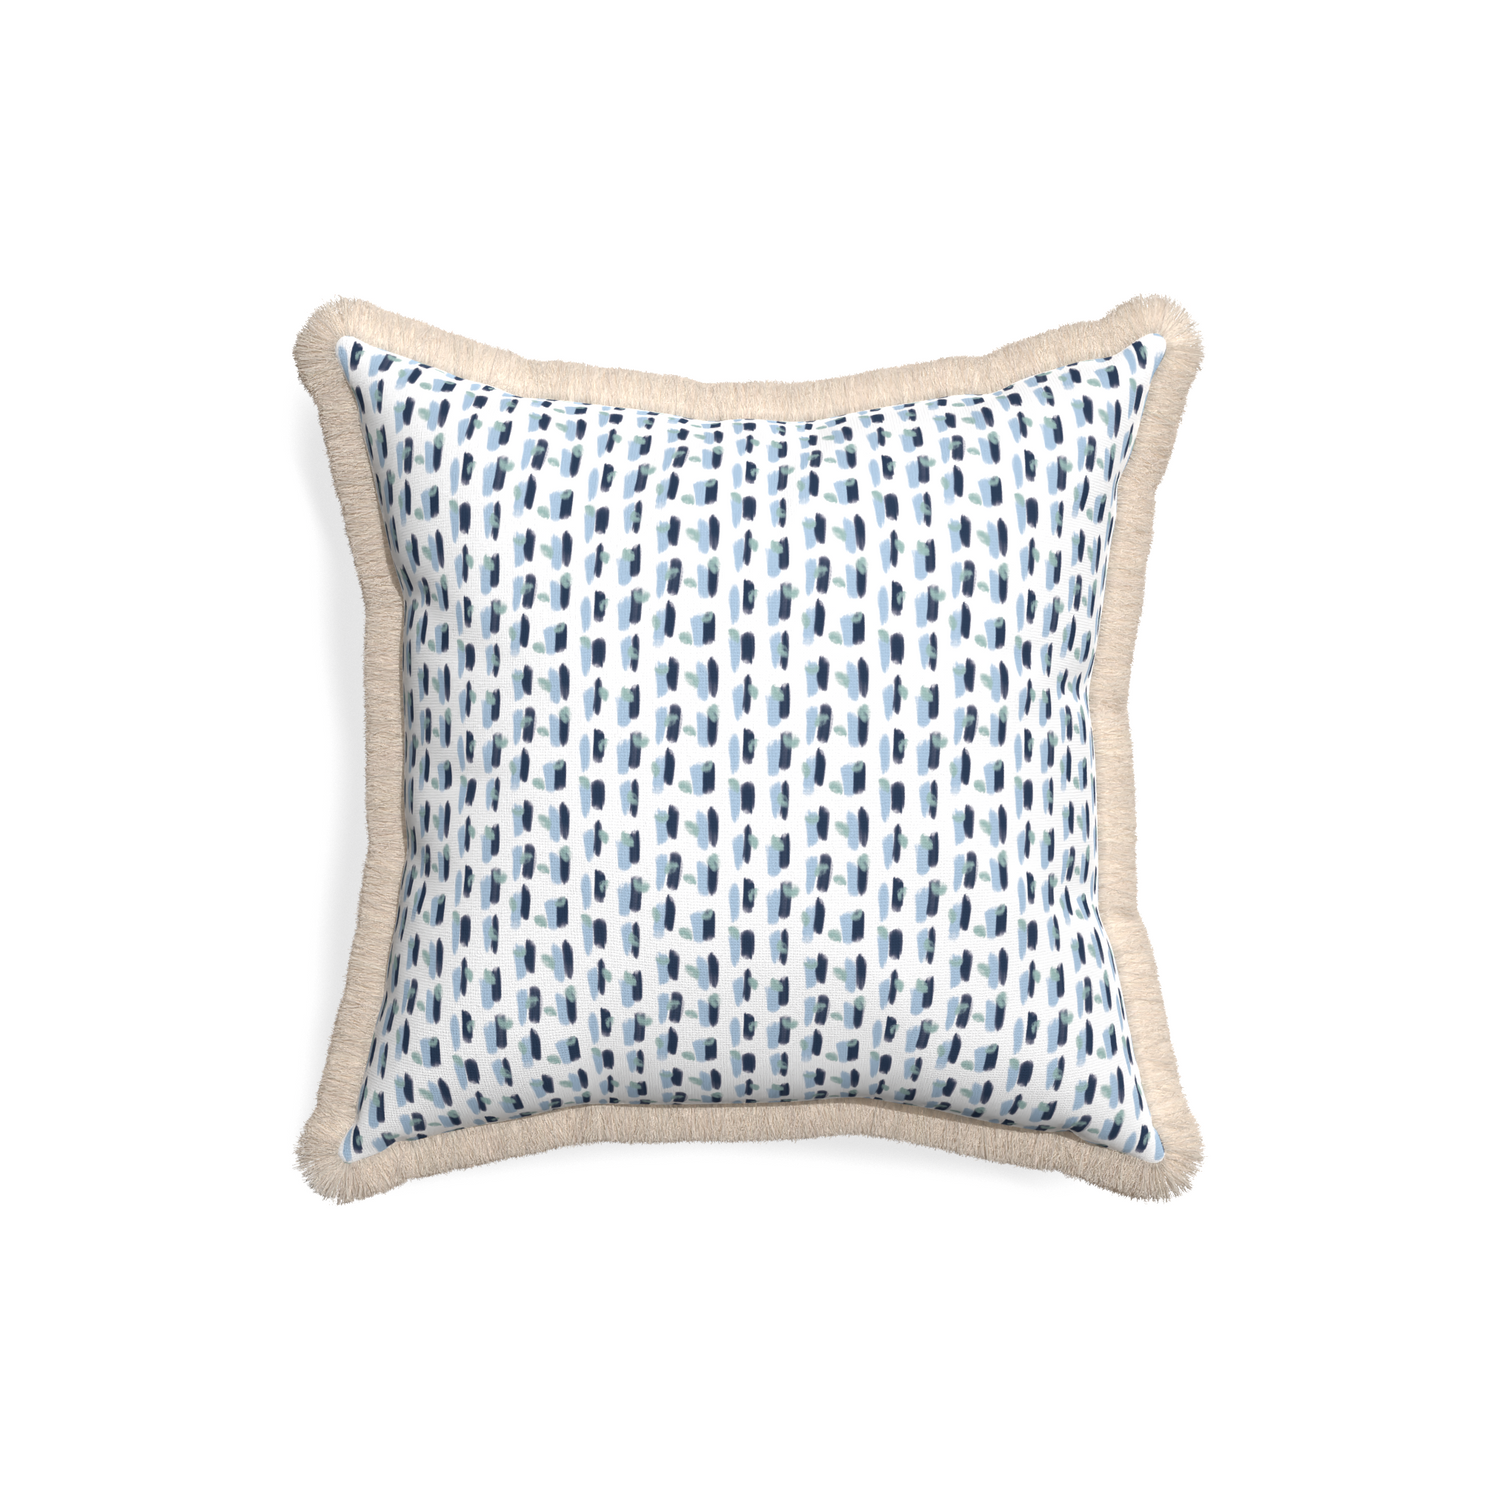 18-square poppy blue custom pillow with cream fringe on white background